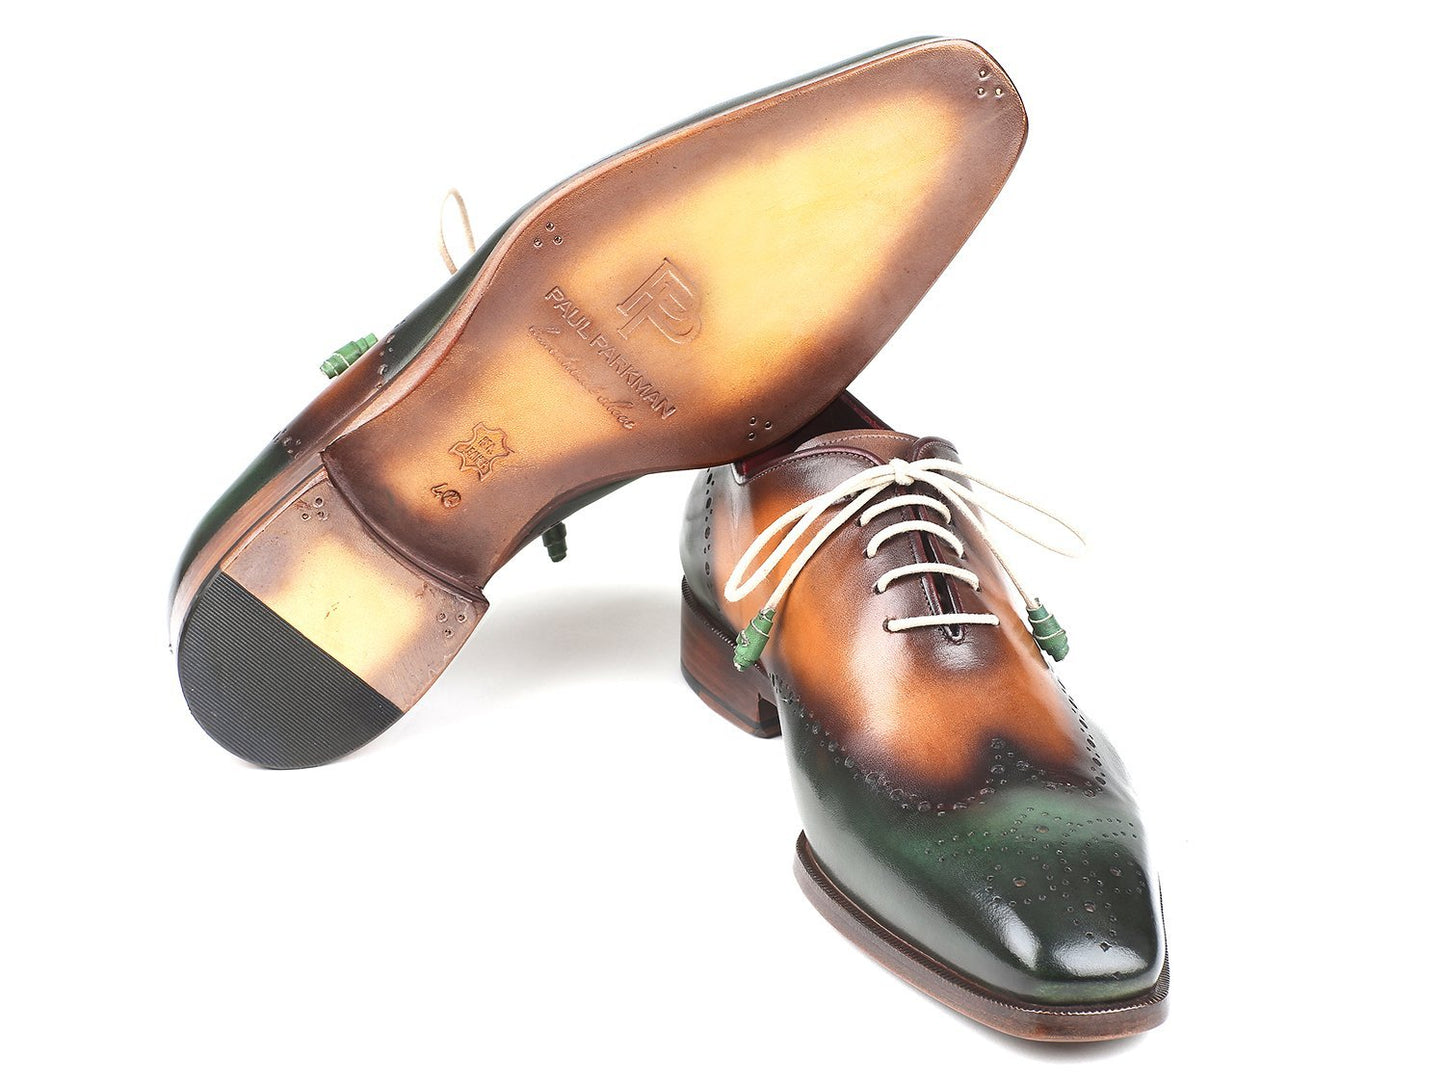 Handgemachte Schuhe aus den USA Paul Parkman Grün & Kamel  Flügelspitze  Oxfords tif shop 24.de